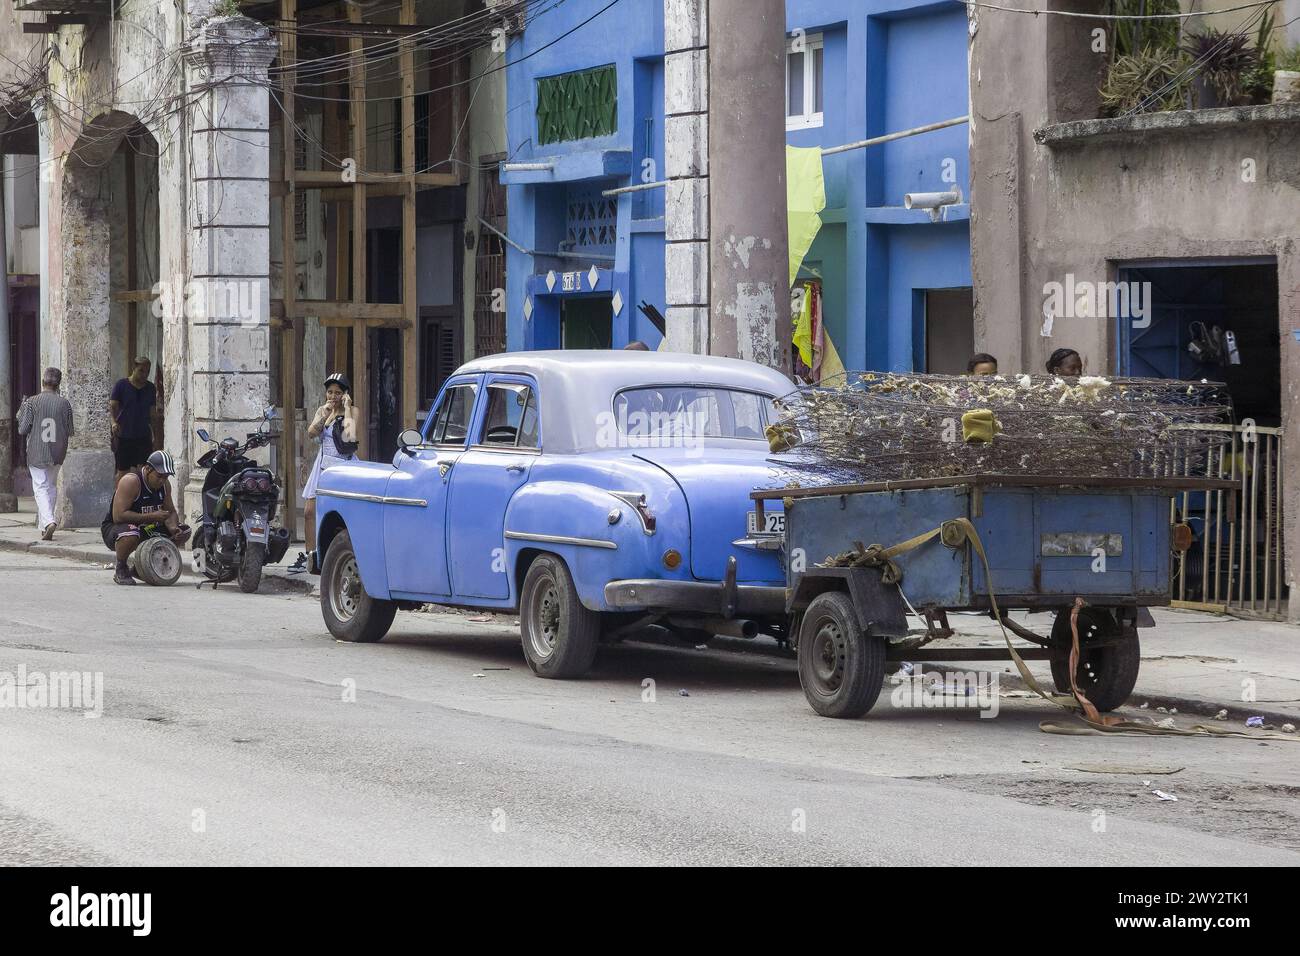 Old American car with trailer, Havana, Cuba Stock Photo